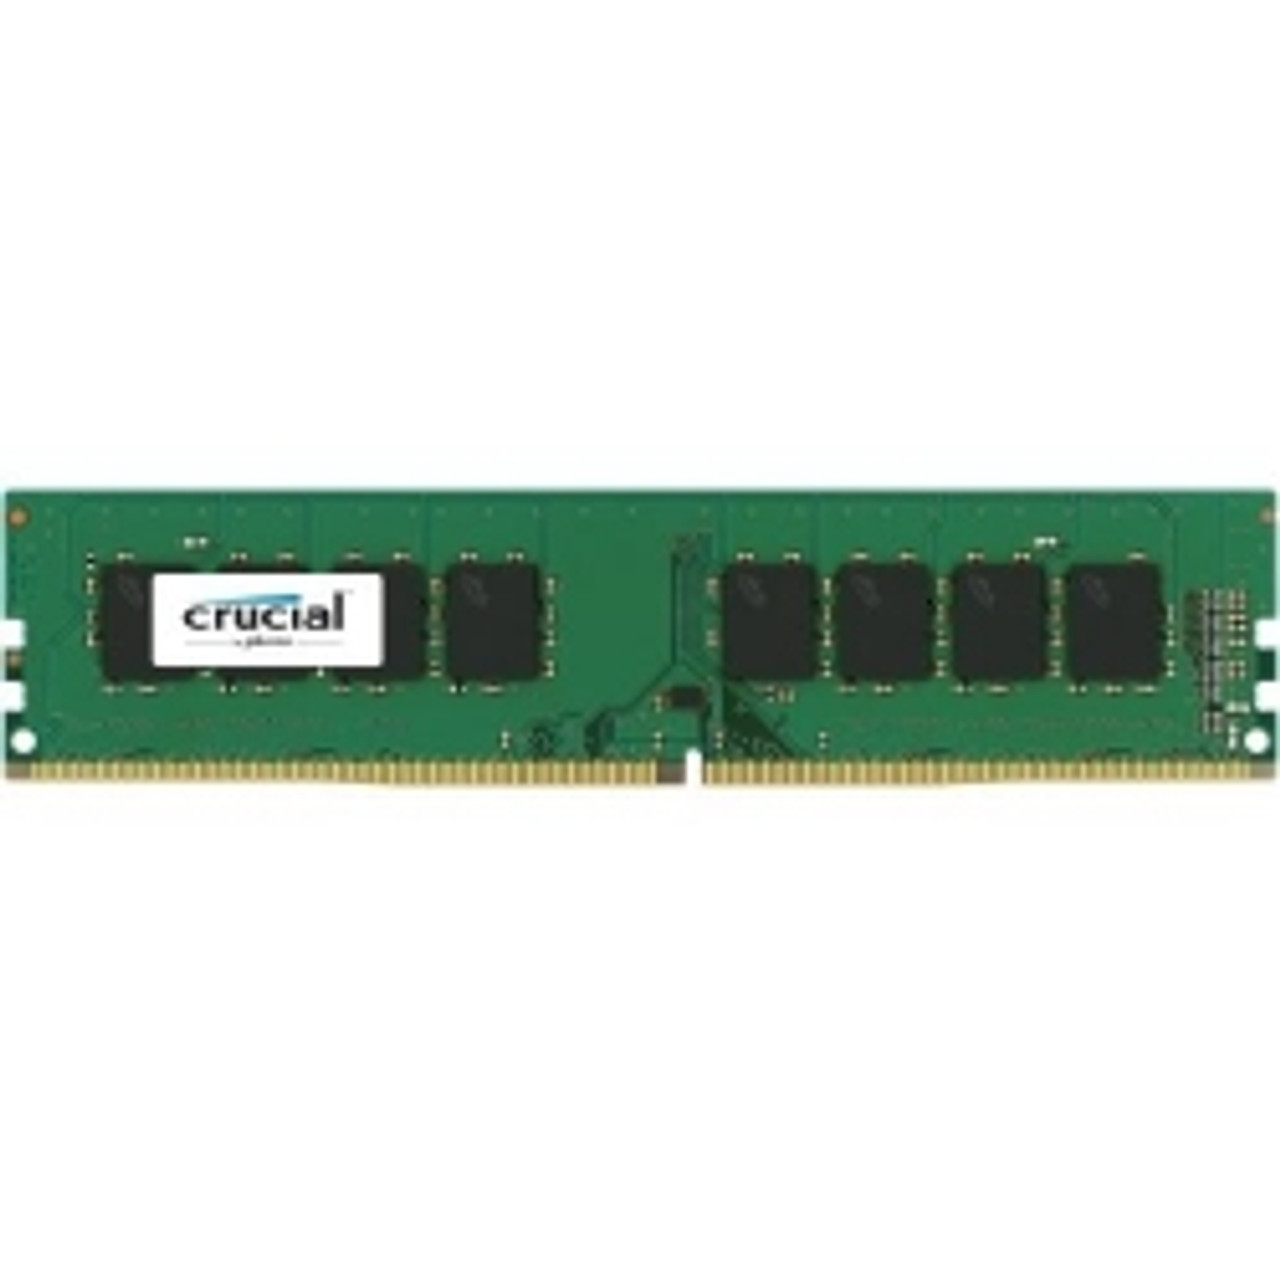 Crucial CT4G4DFS824A 4GB DDR4 2400MHz memory module